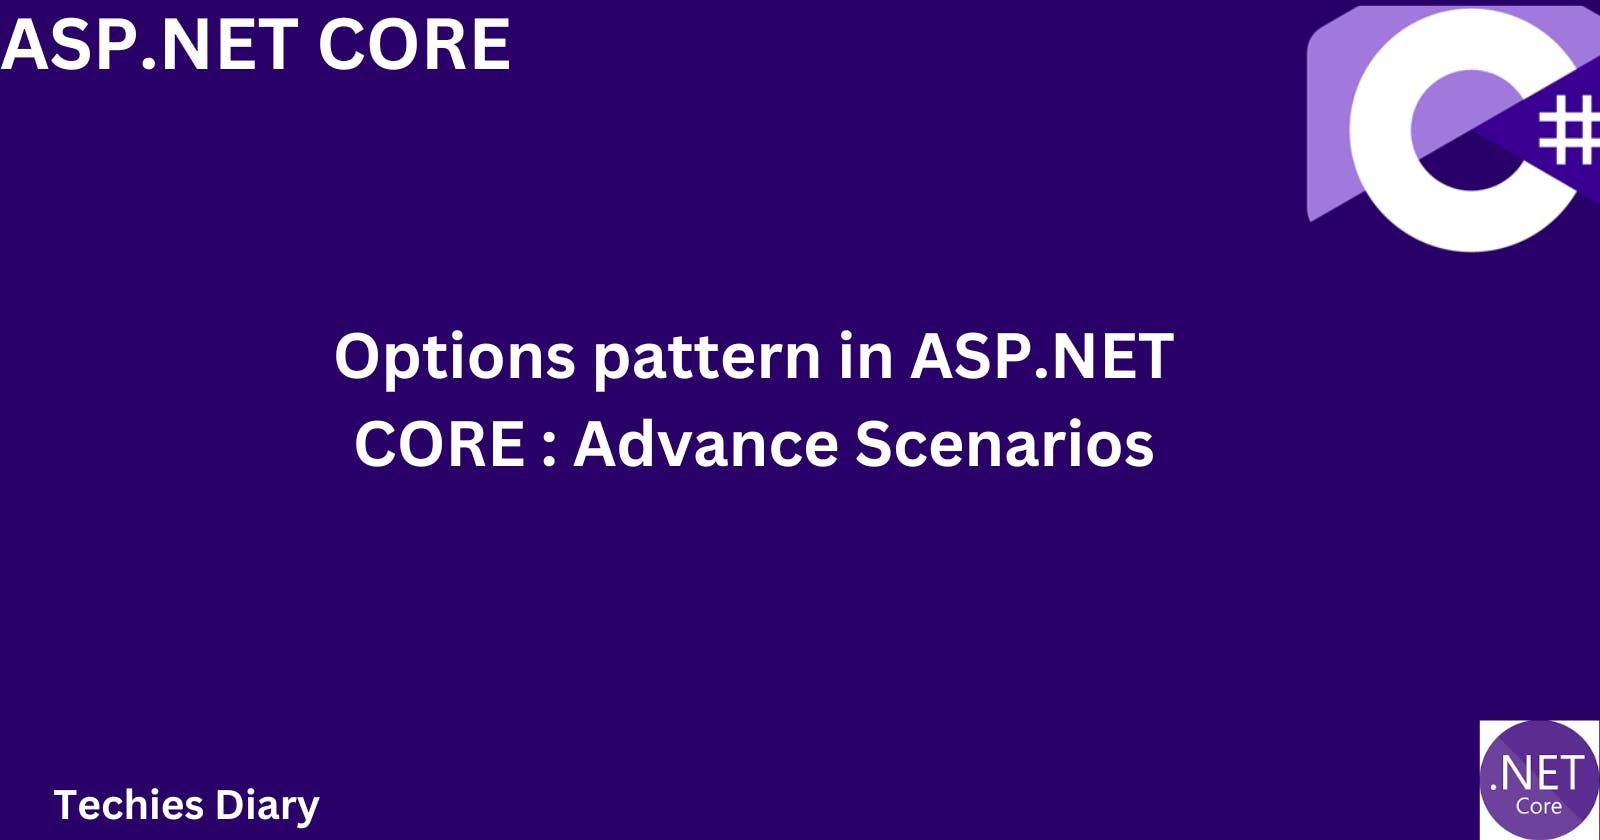 Options pattern in ASP.NET Core:  Advance scenario